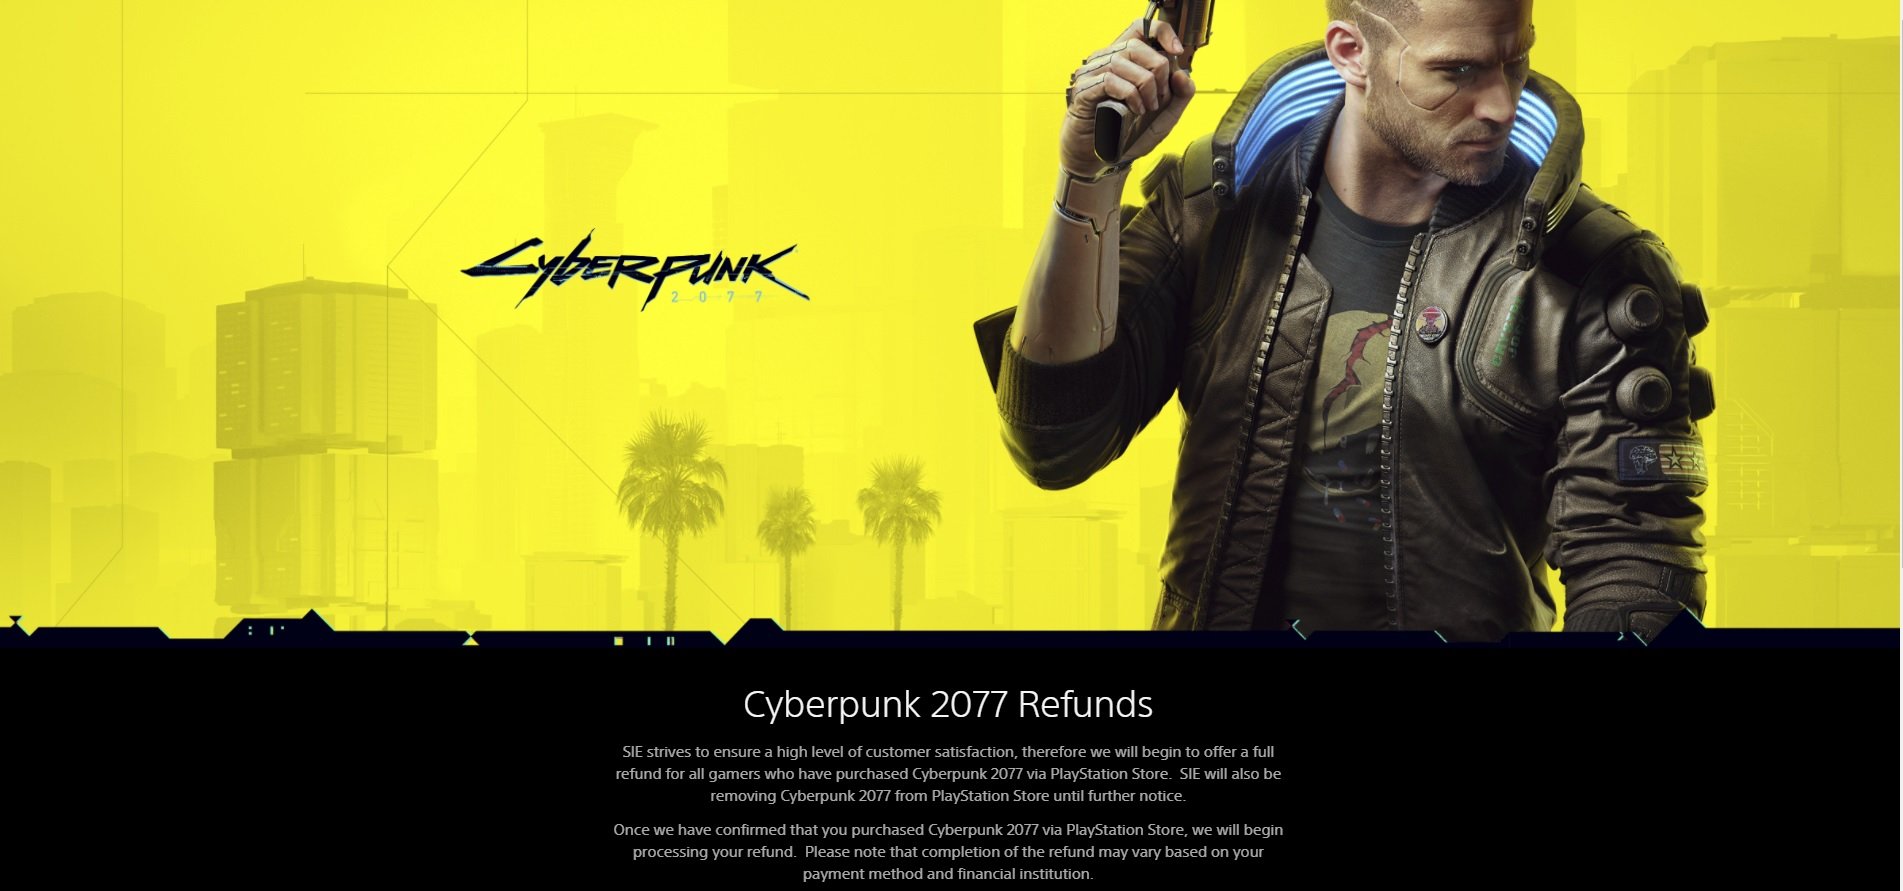 Cyberpunk 2077 returning to PSN on June 21